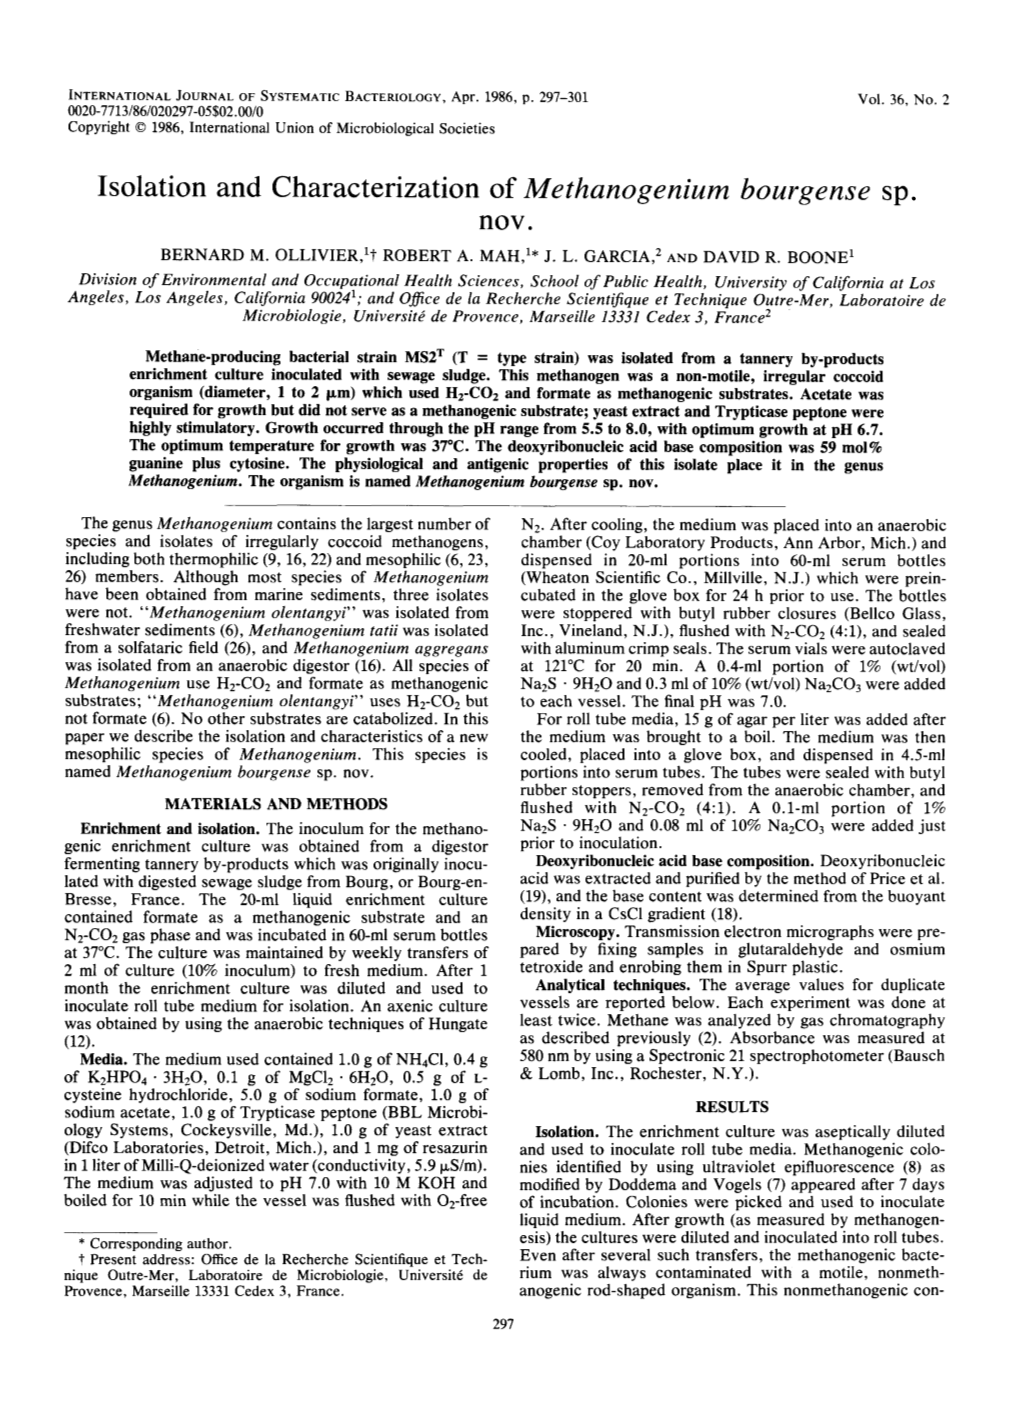 Isolation and Characterization of Methanogenium Bourgense Nov